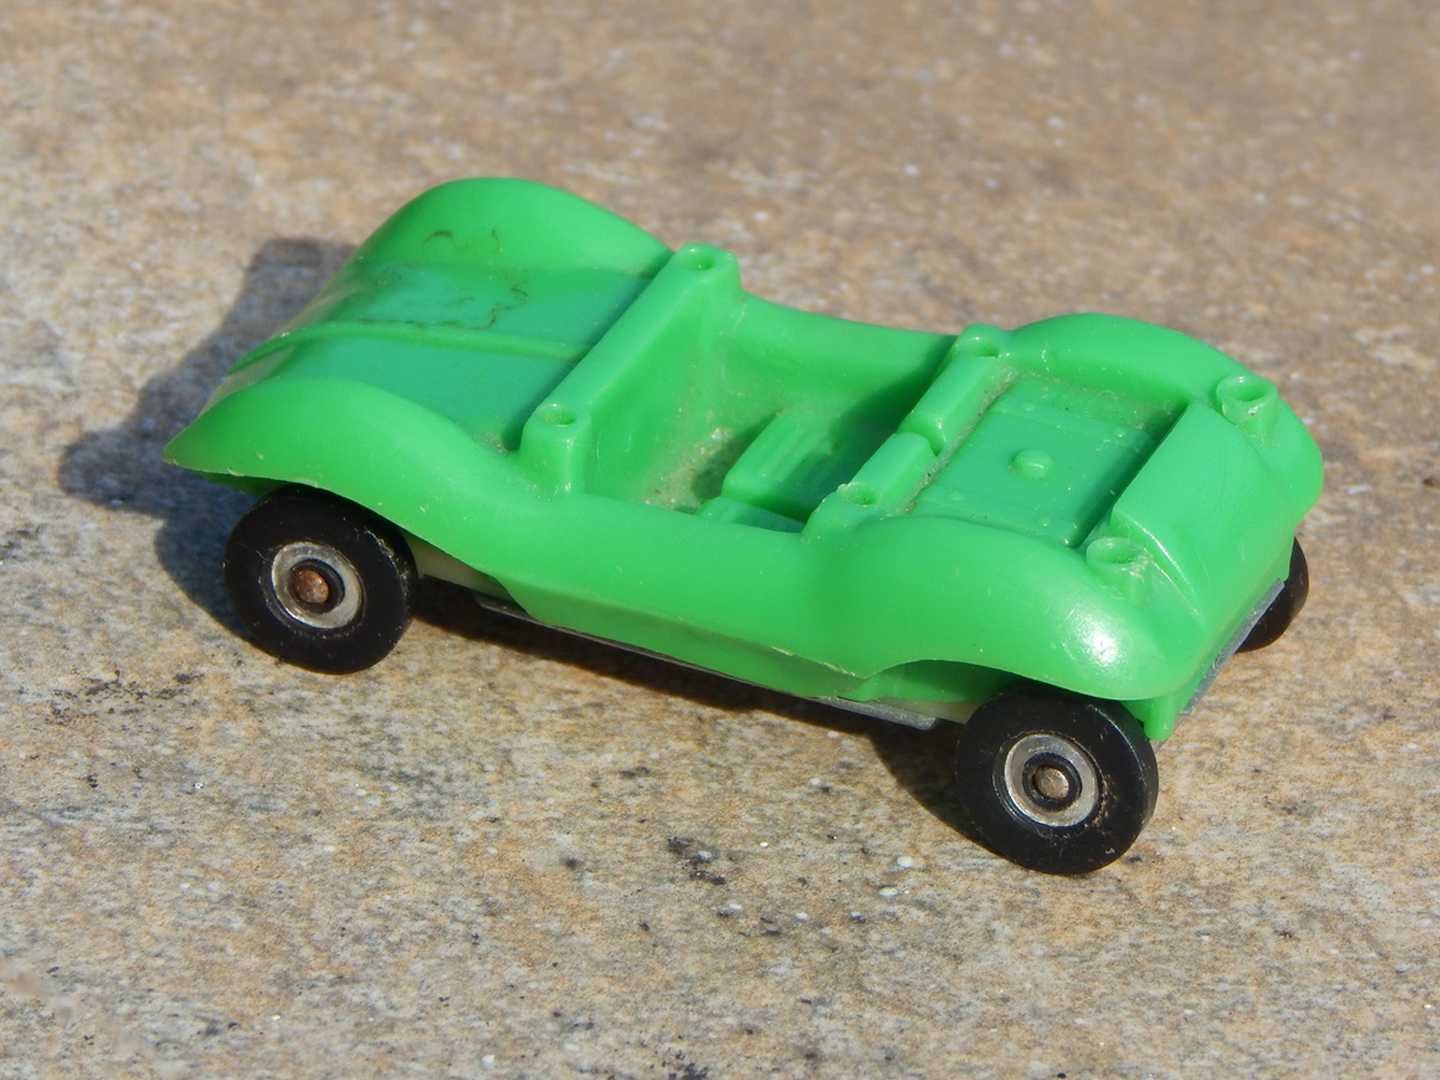 Macheta jucarie veche masinuta Volkswagen Dune Buggy verde Lone Star